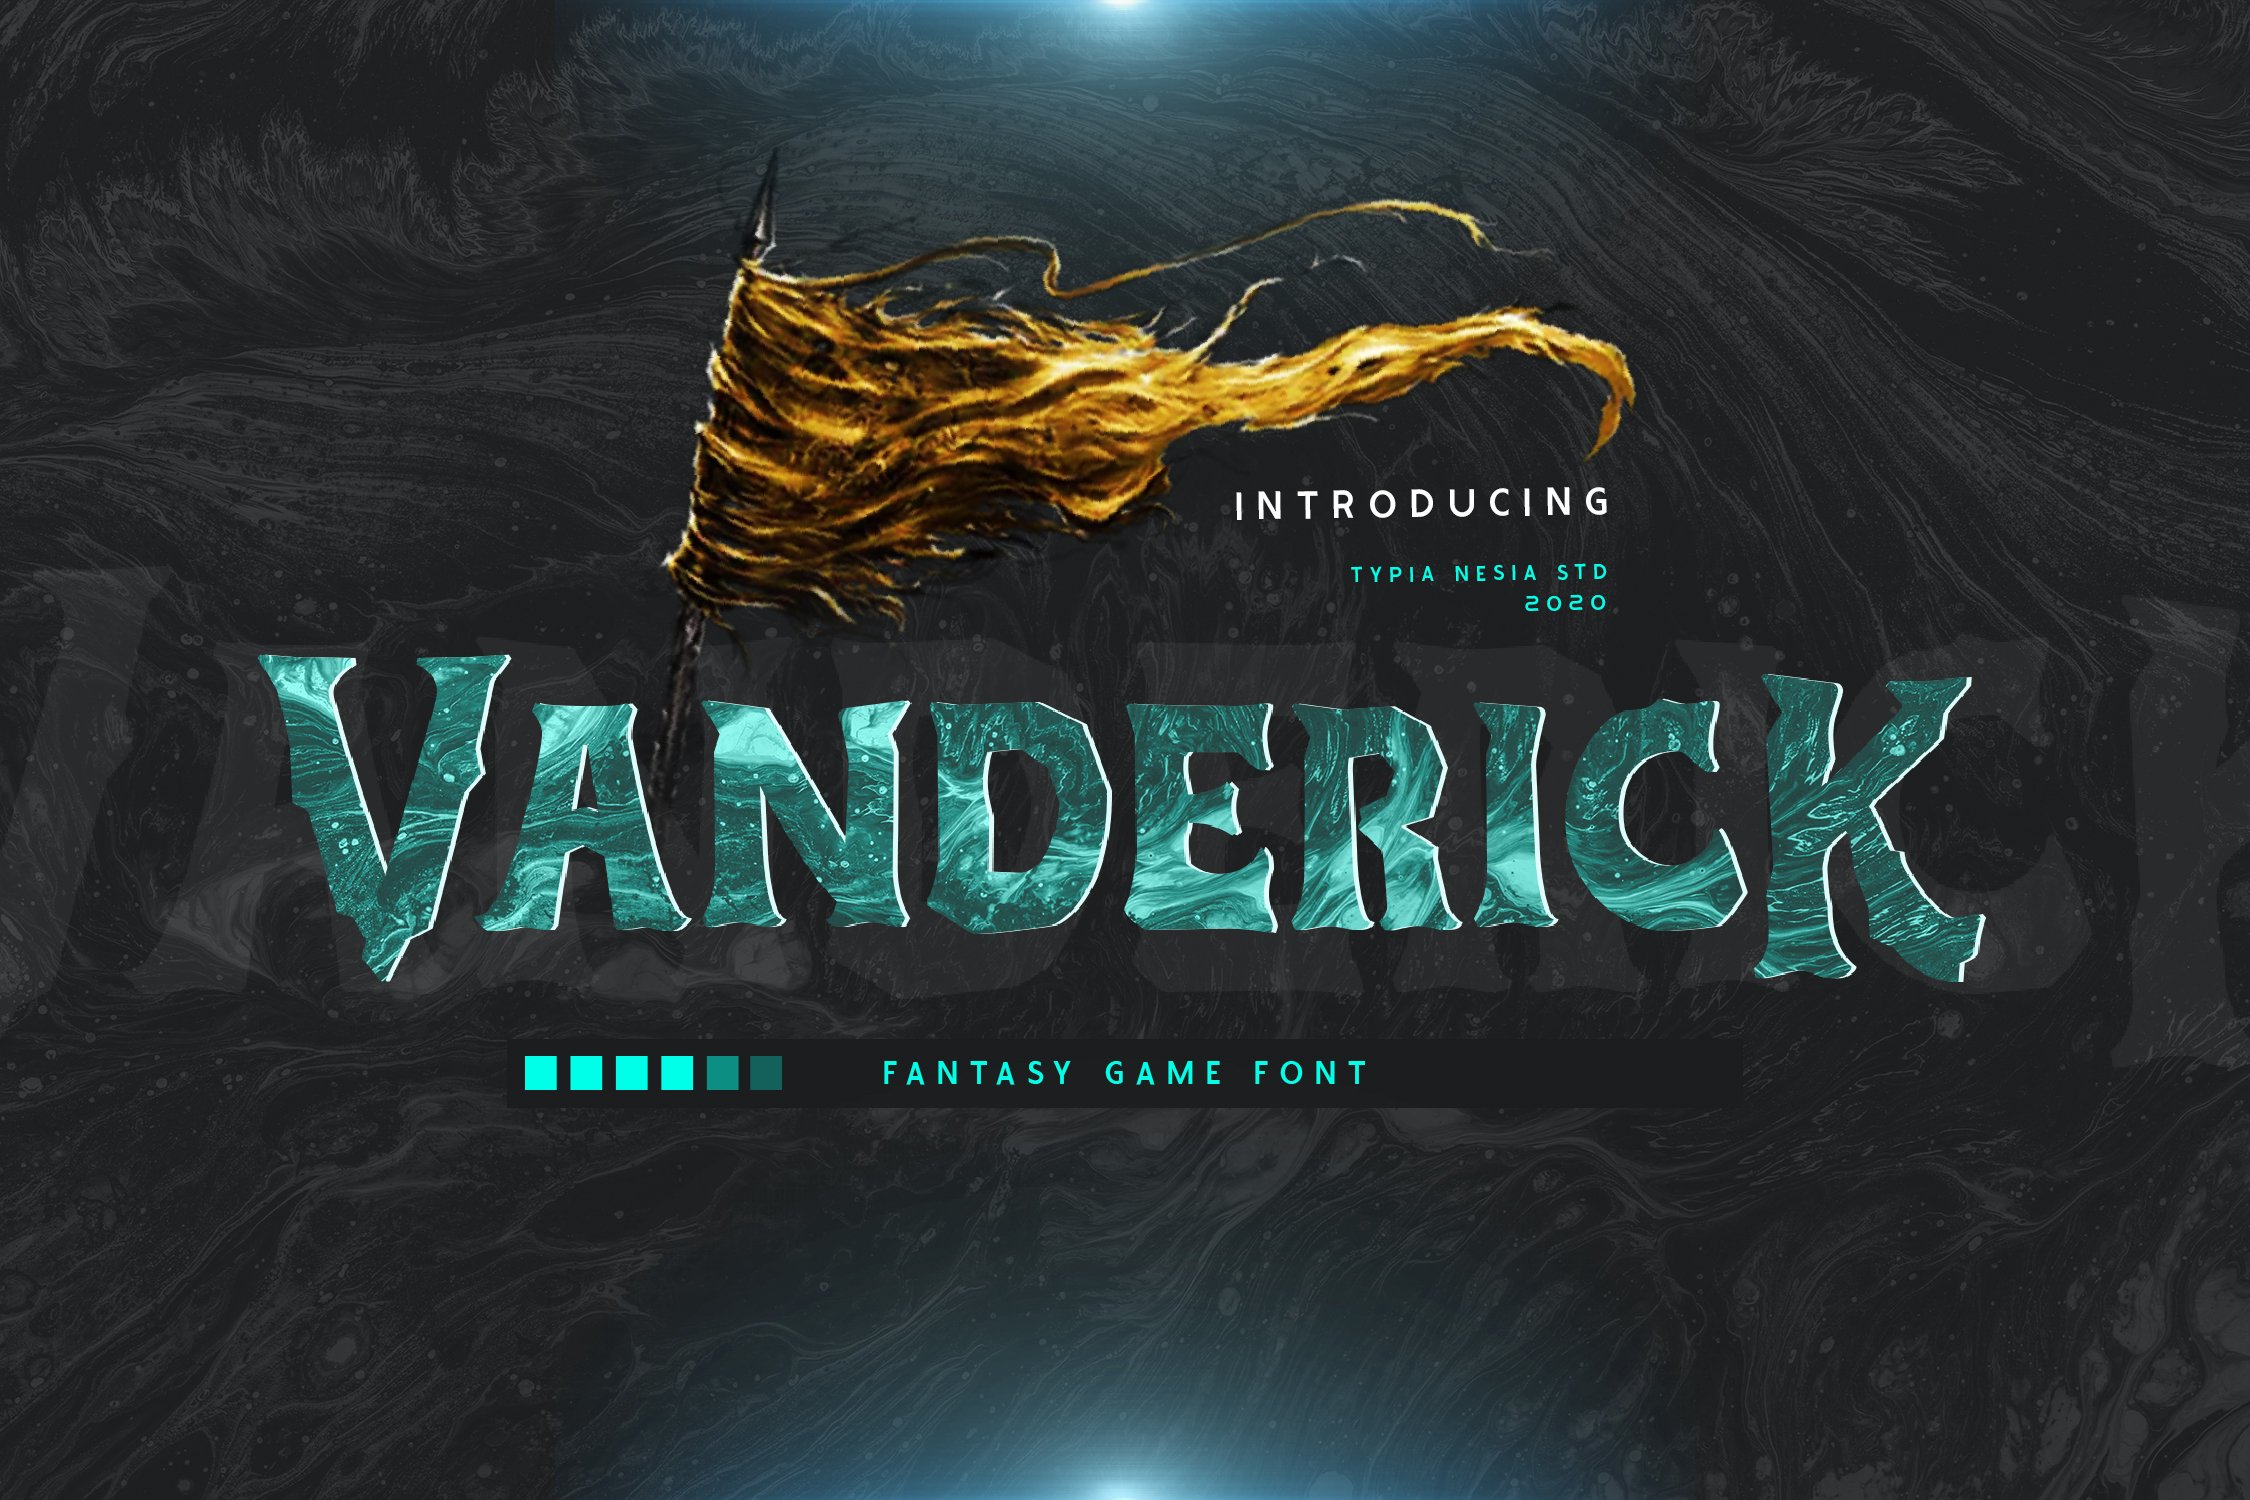 Vanderick - Fantasy Game Font cover image.